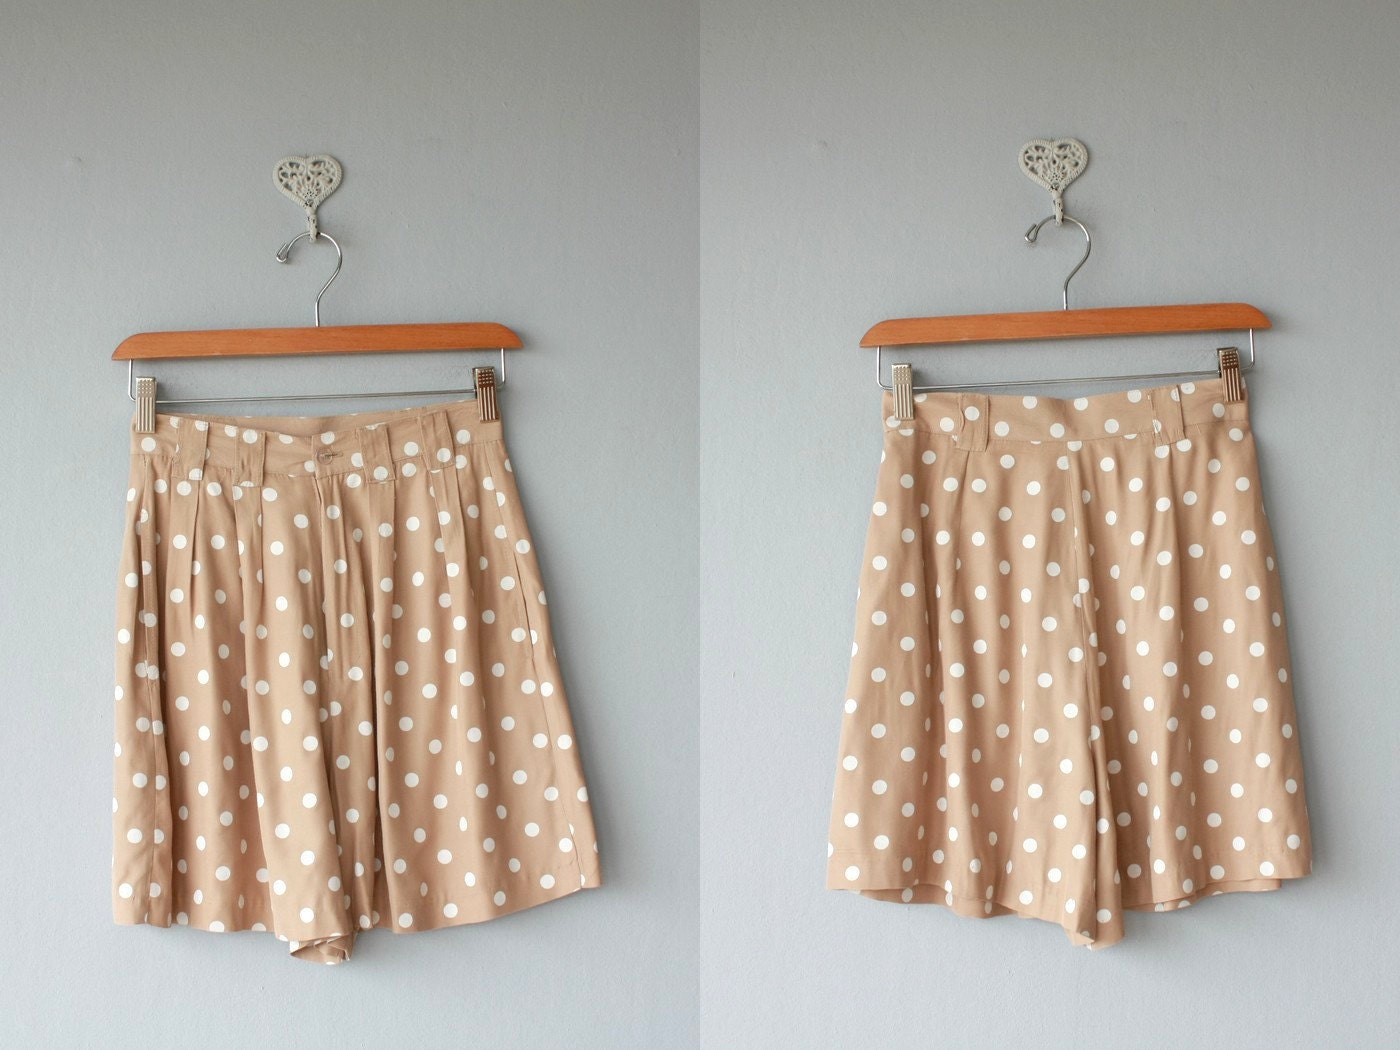 polka dot shorts / 1980s high waisted shorts / 80s pleated shorts - size small